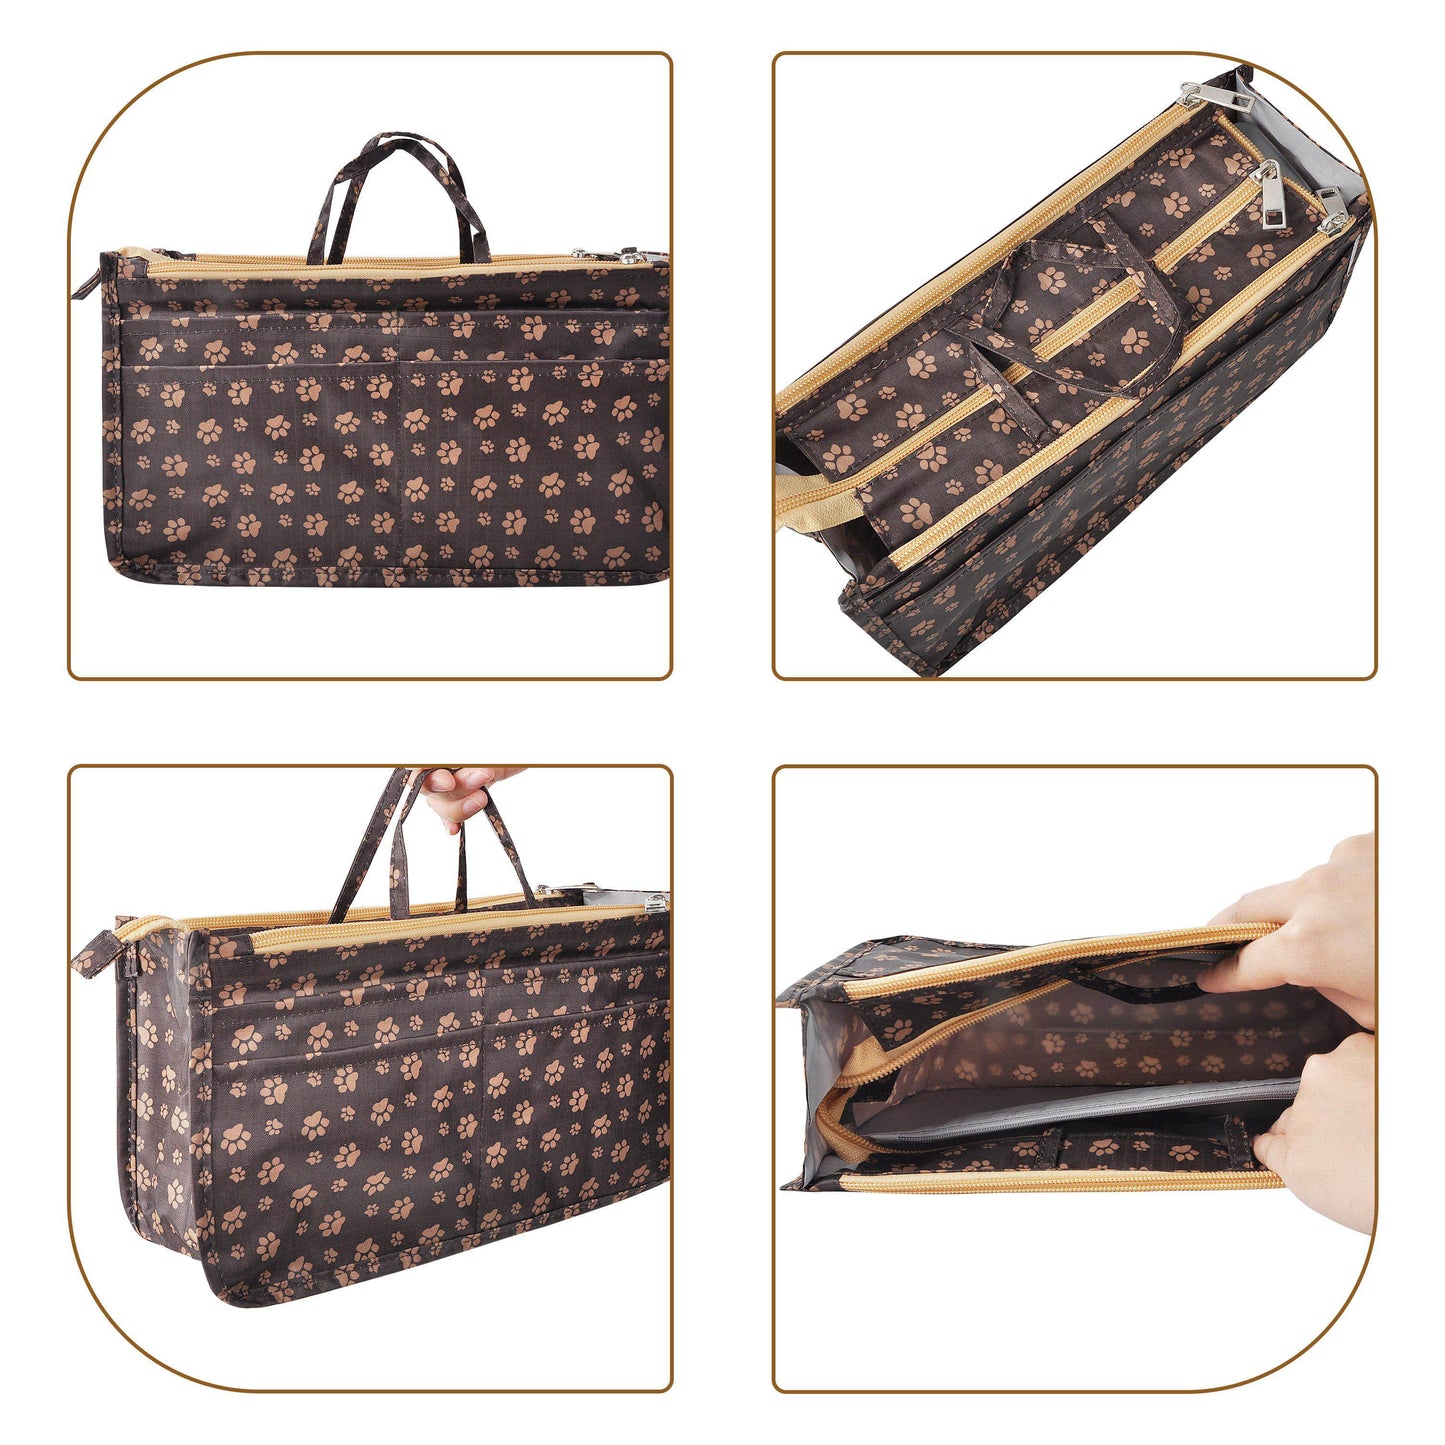 Purse Handbag Tote Pocketbook Bag Organizer Insert with Zipper Handle for Women Patterned